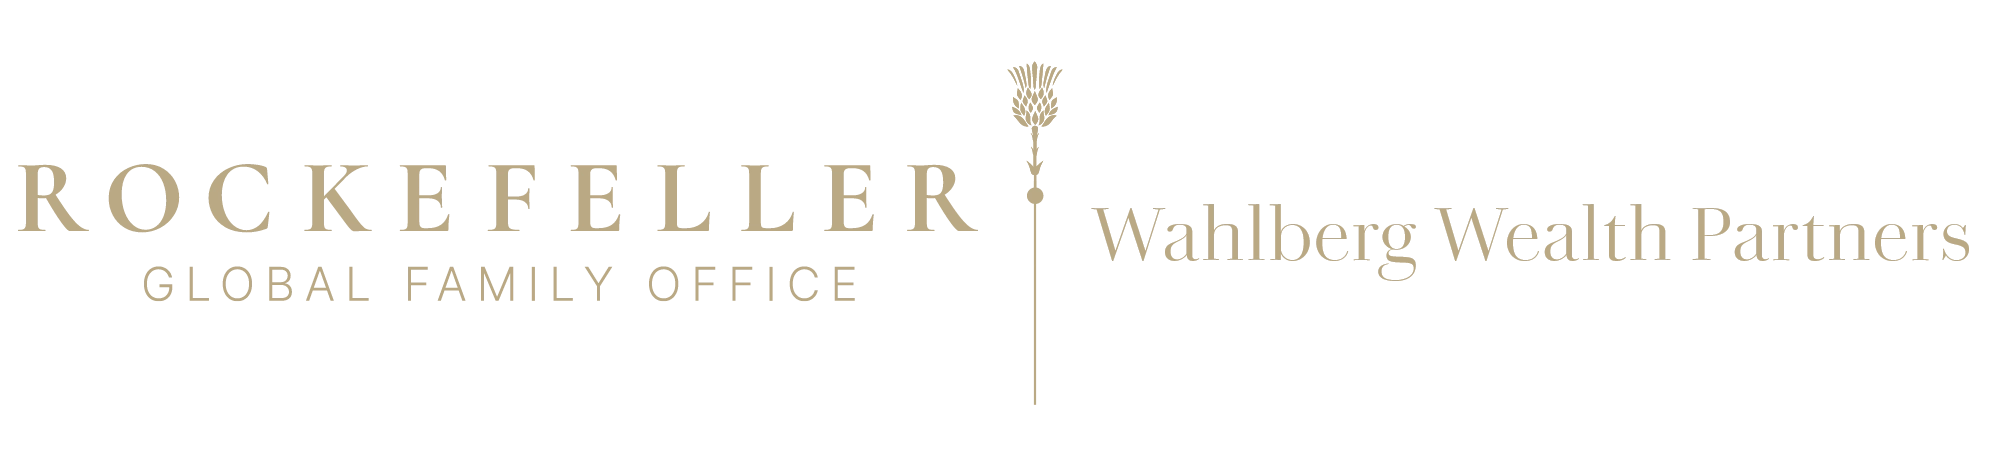 Wahlberg Wealth Partners